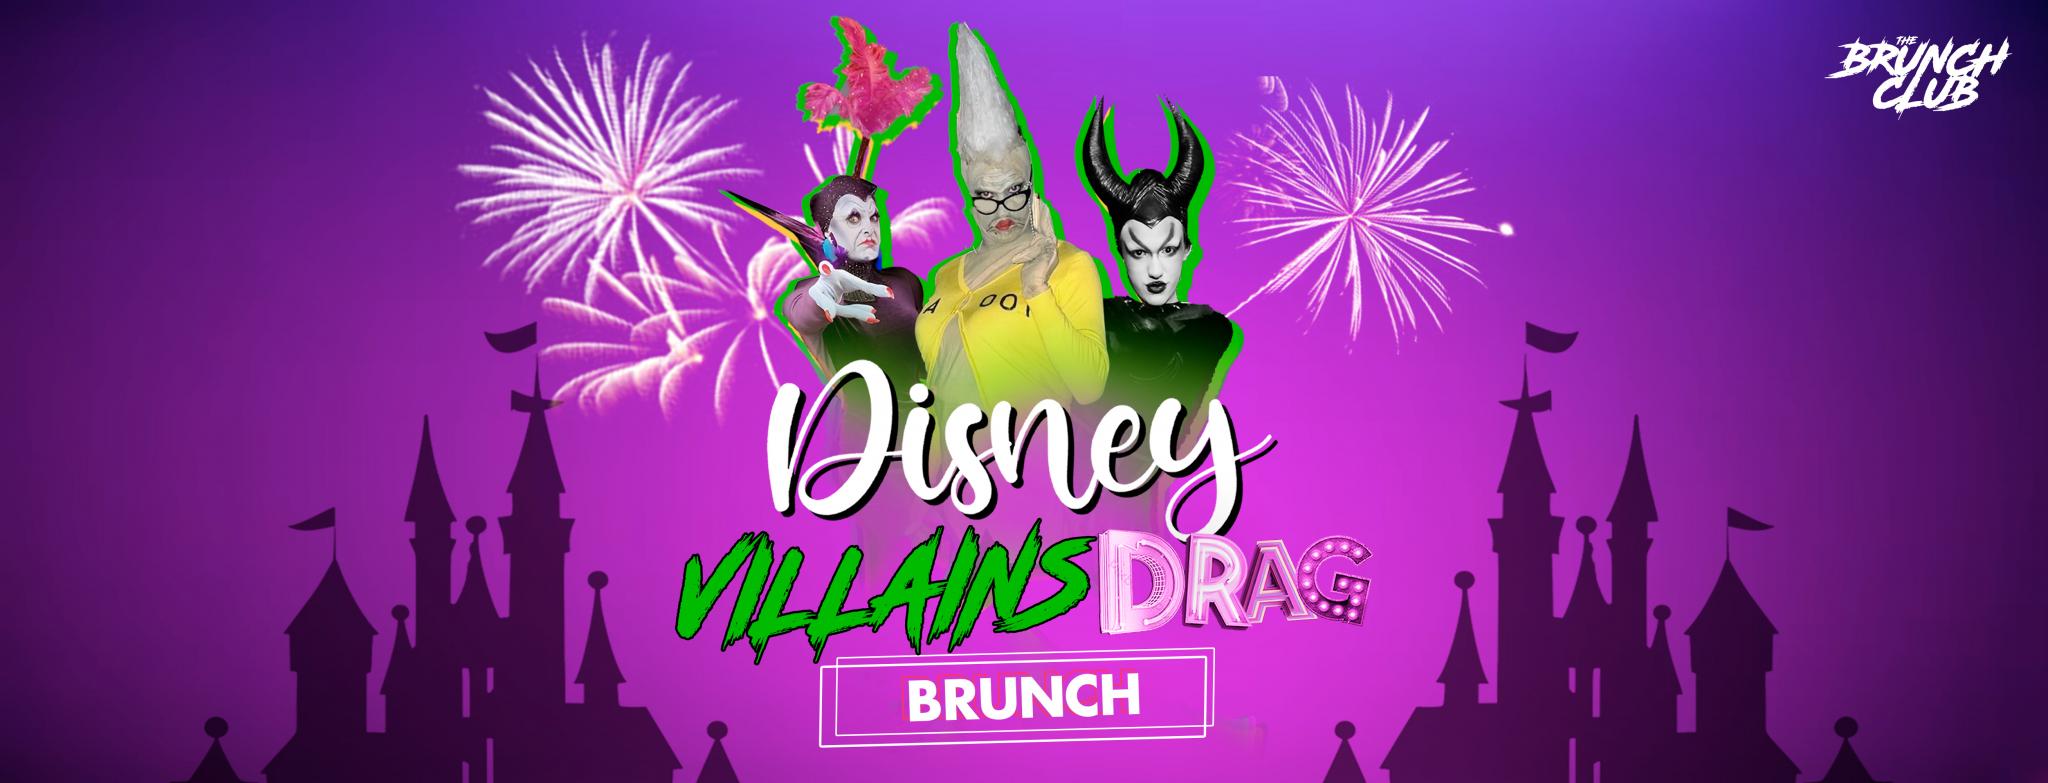 Disney Villains Drag Boozy Brunch - Aberdeen